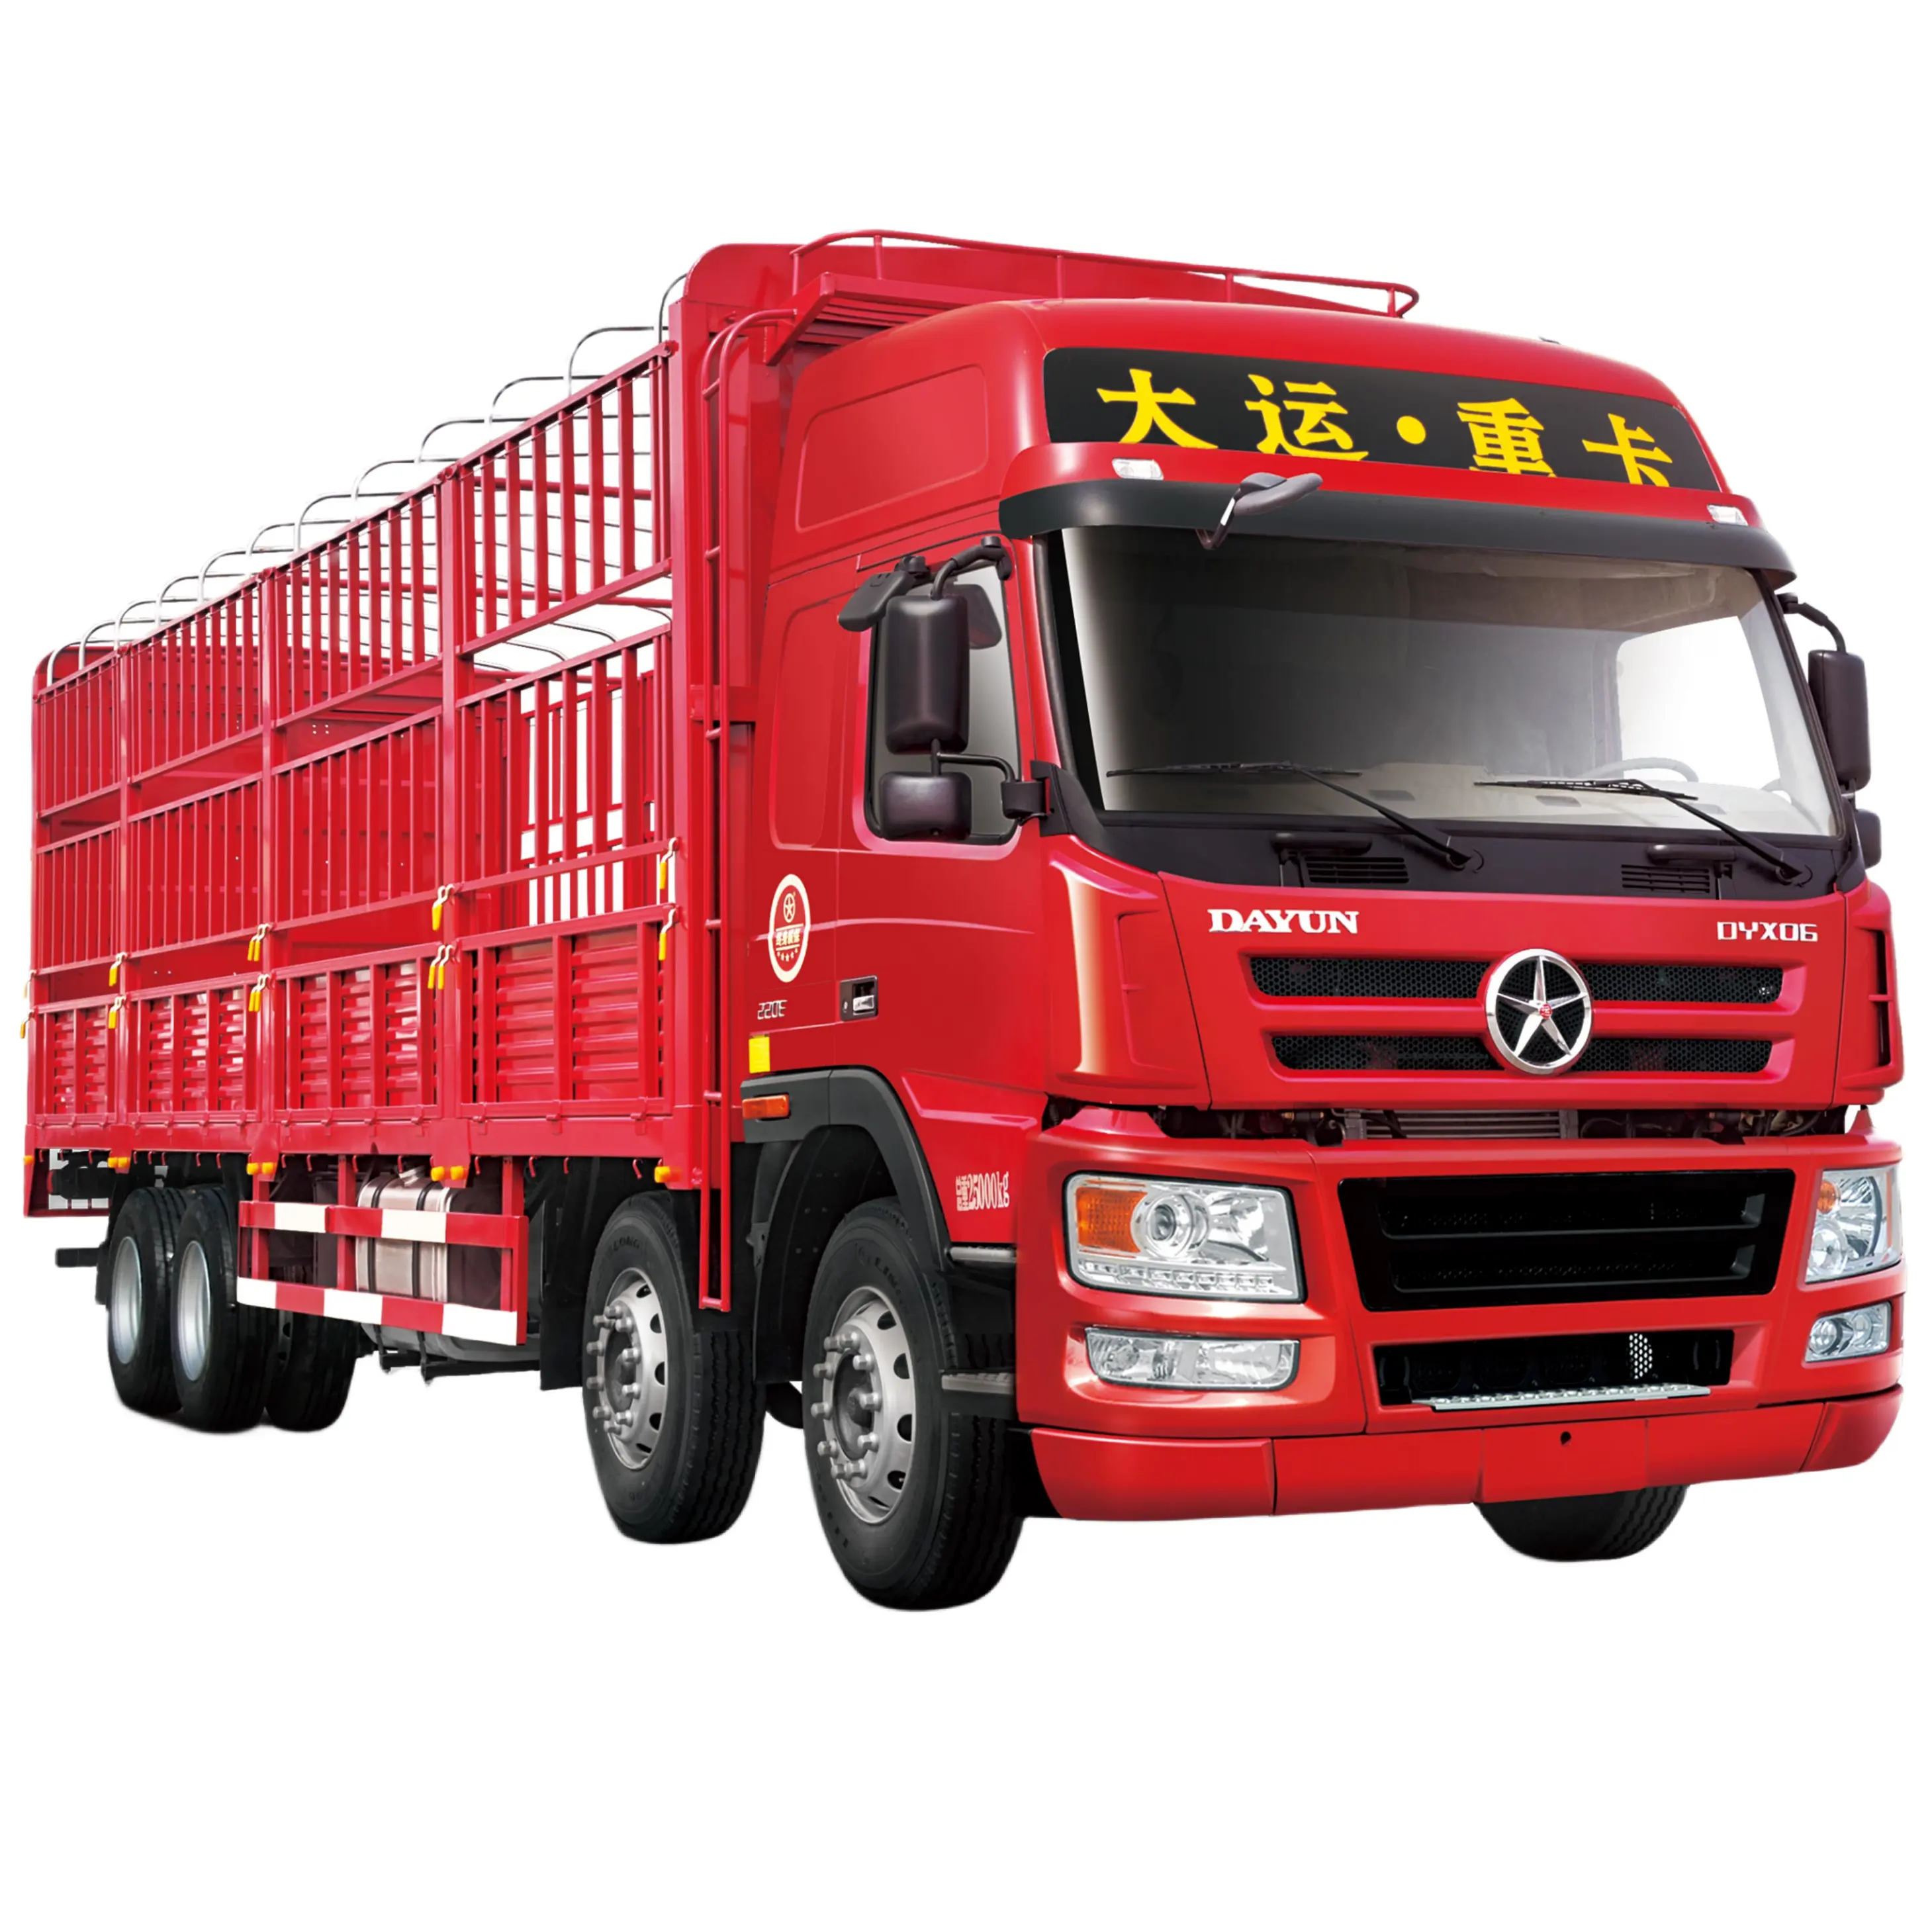 2023 New N8E 8x4 트럭 픽업 트럭 Chinese Universiade는 경량, 강력한 동력 및 우수한 경제성과 같은 장점이 있습니다.